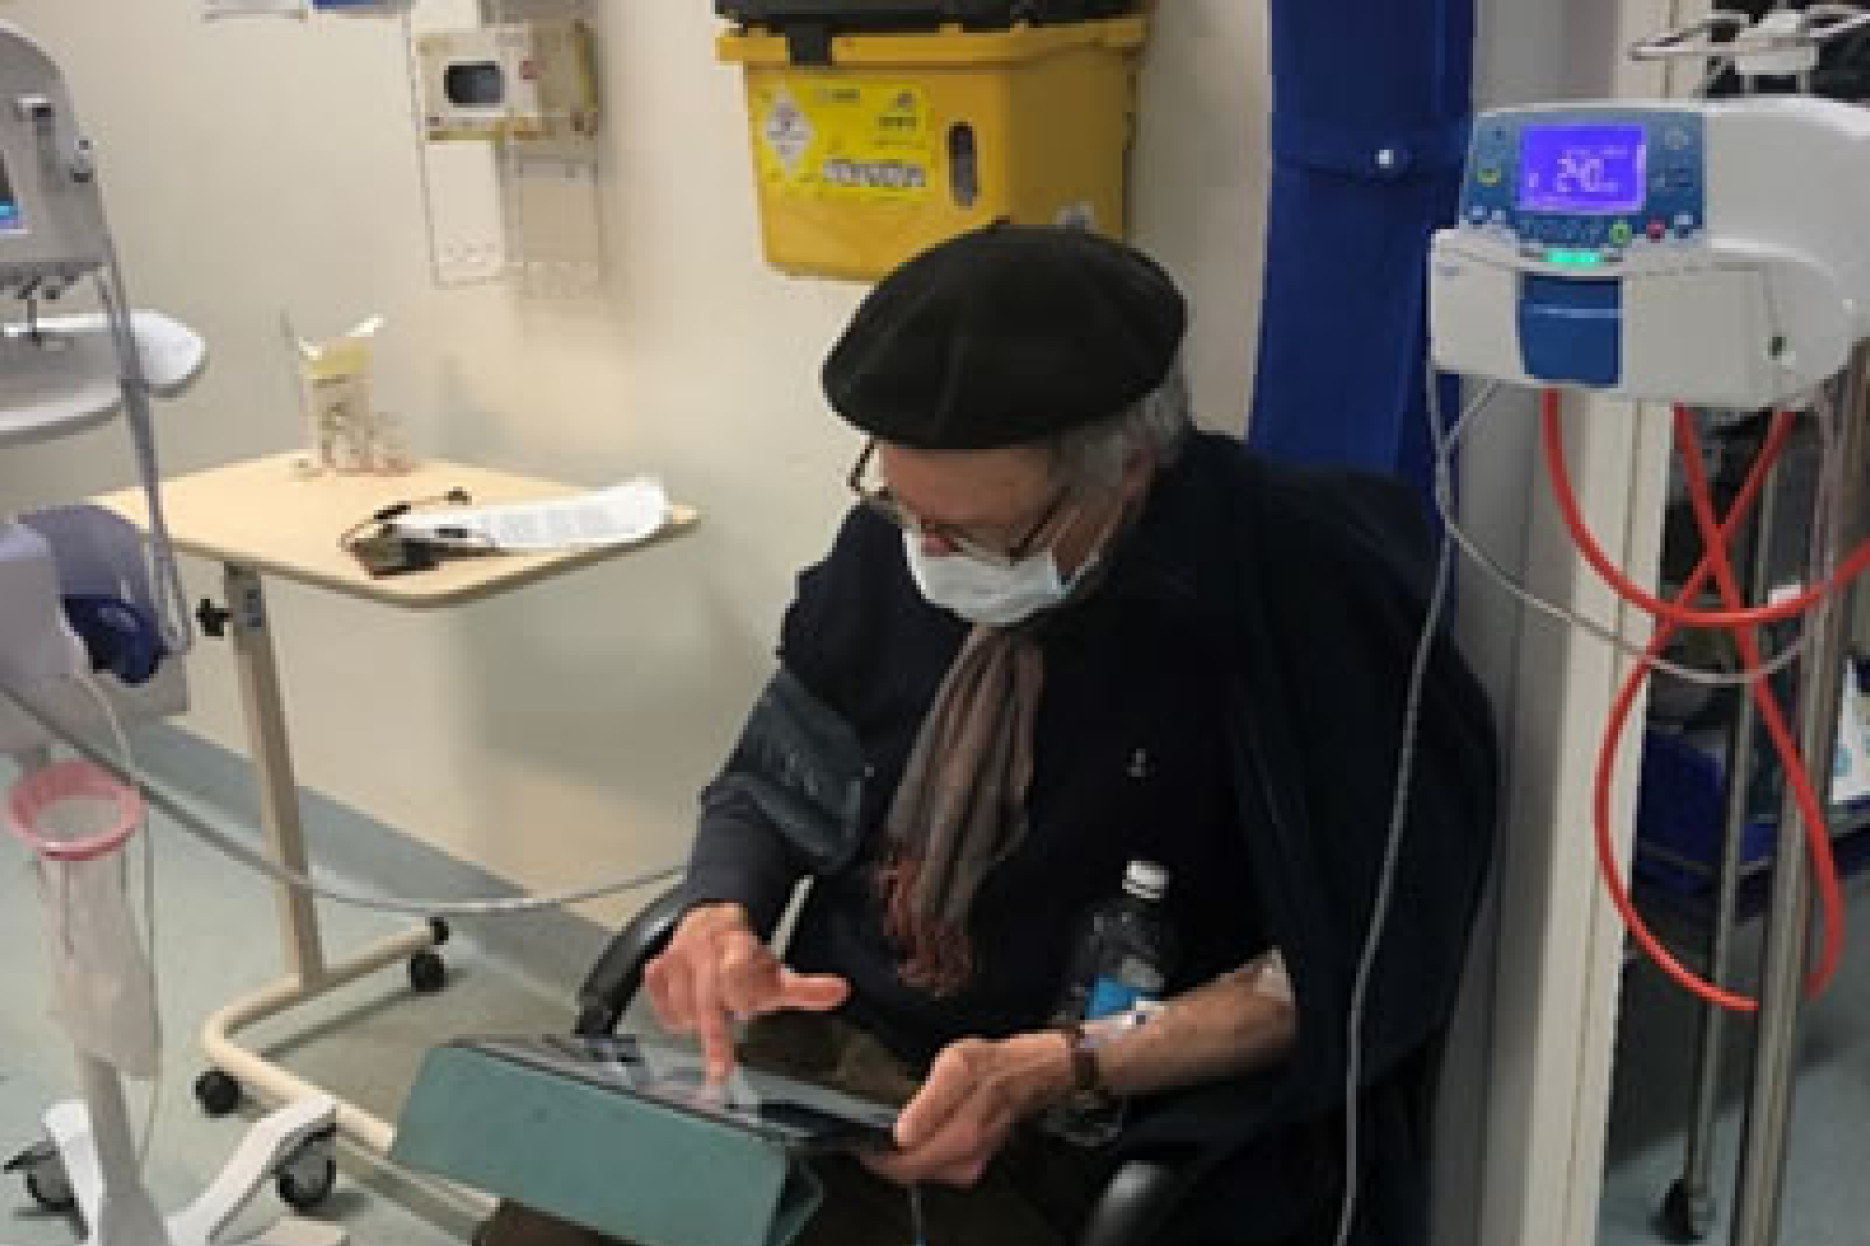 Kyogle outpatient Mathias Rogala-Koczorowski using patient Wi-Fi